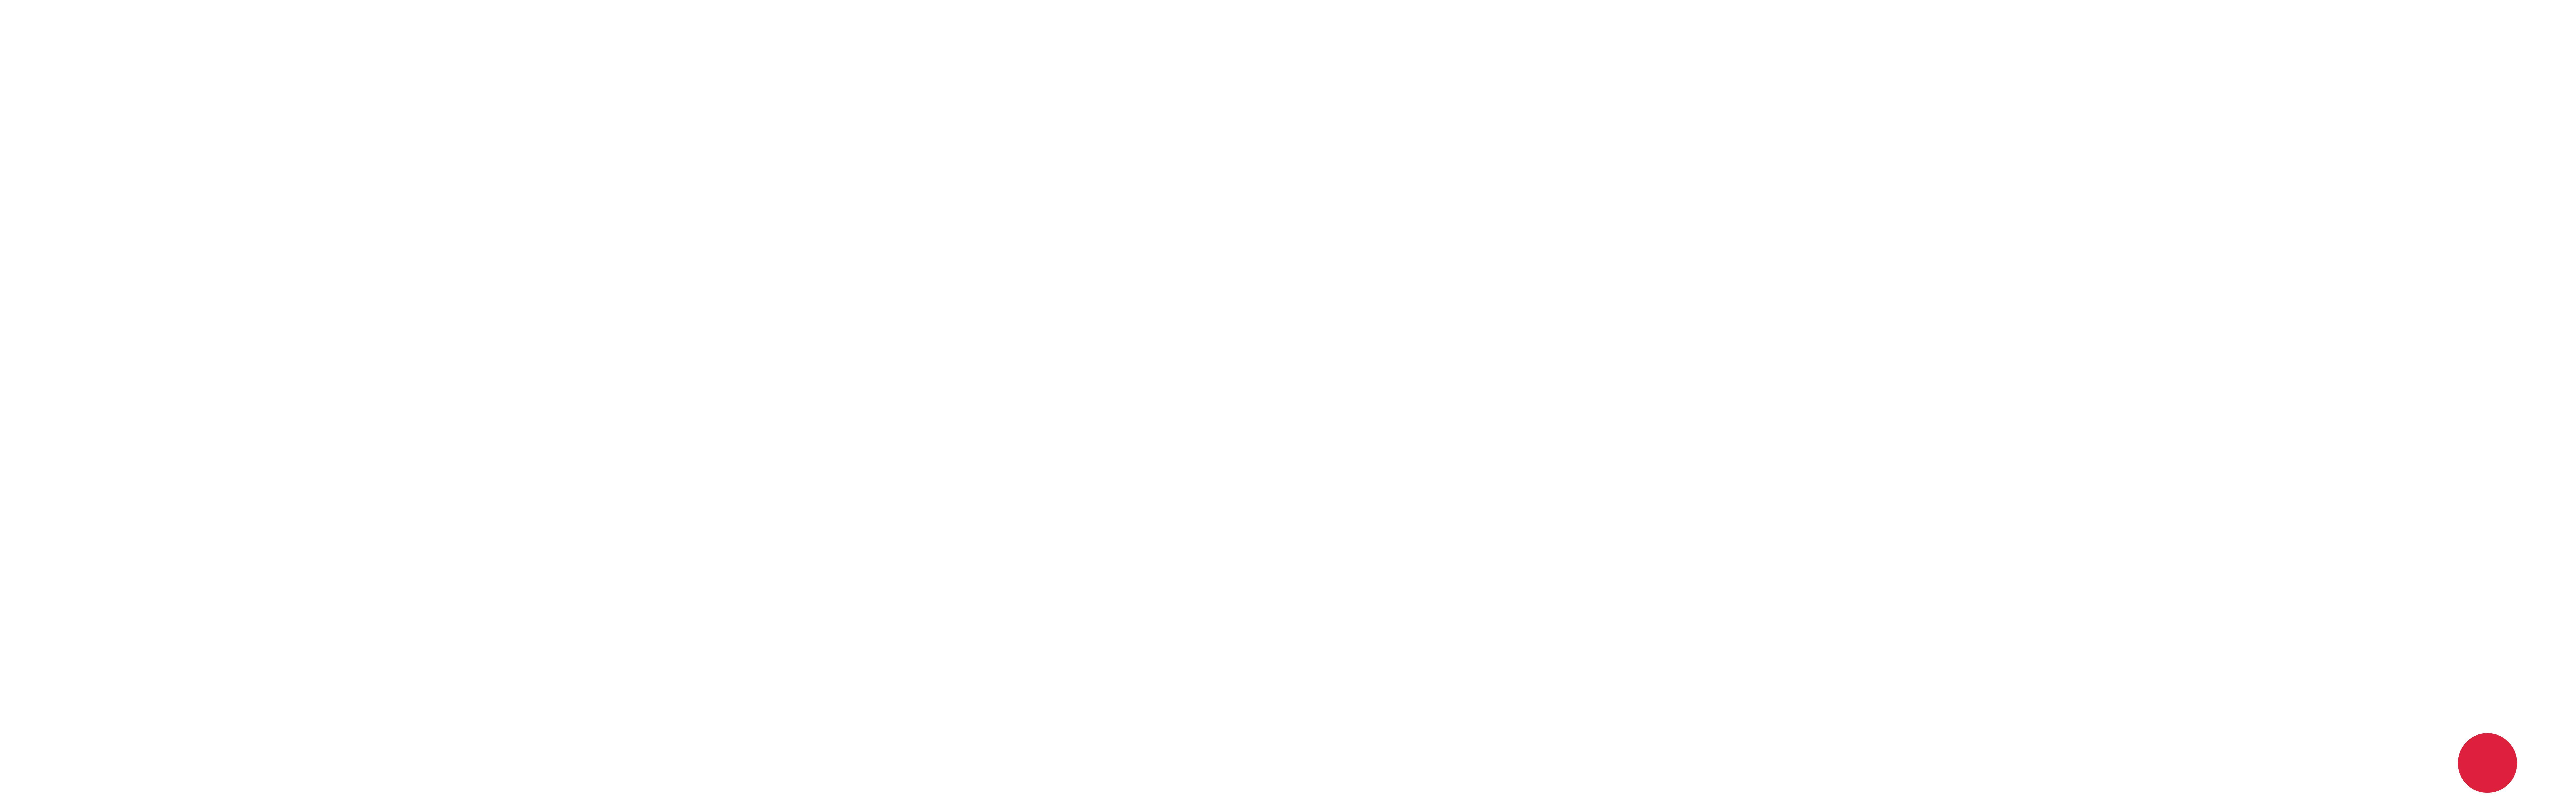 Acuity Reputation Management